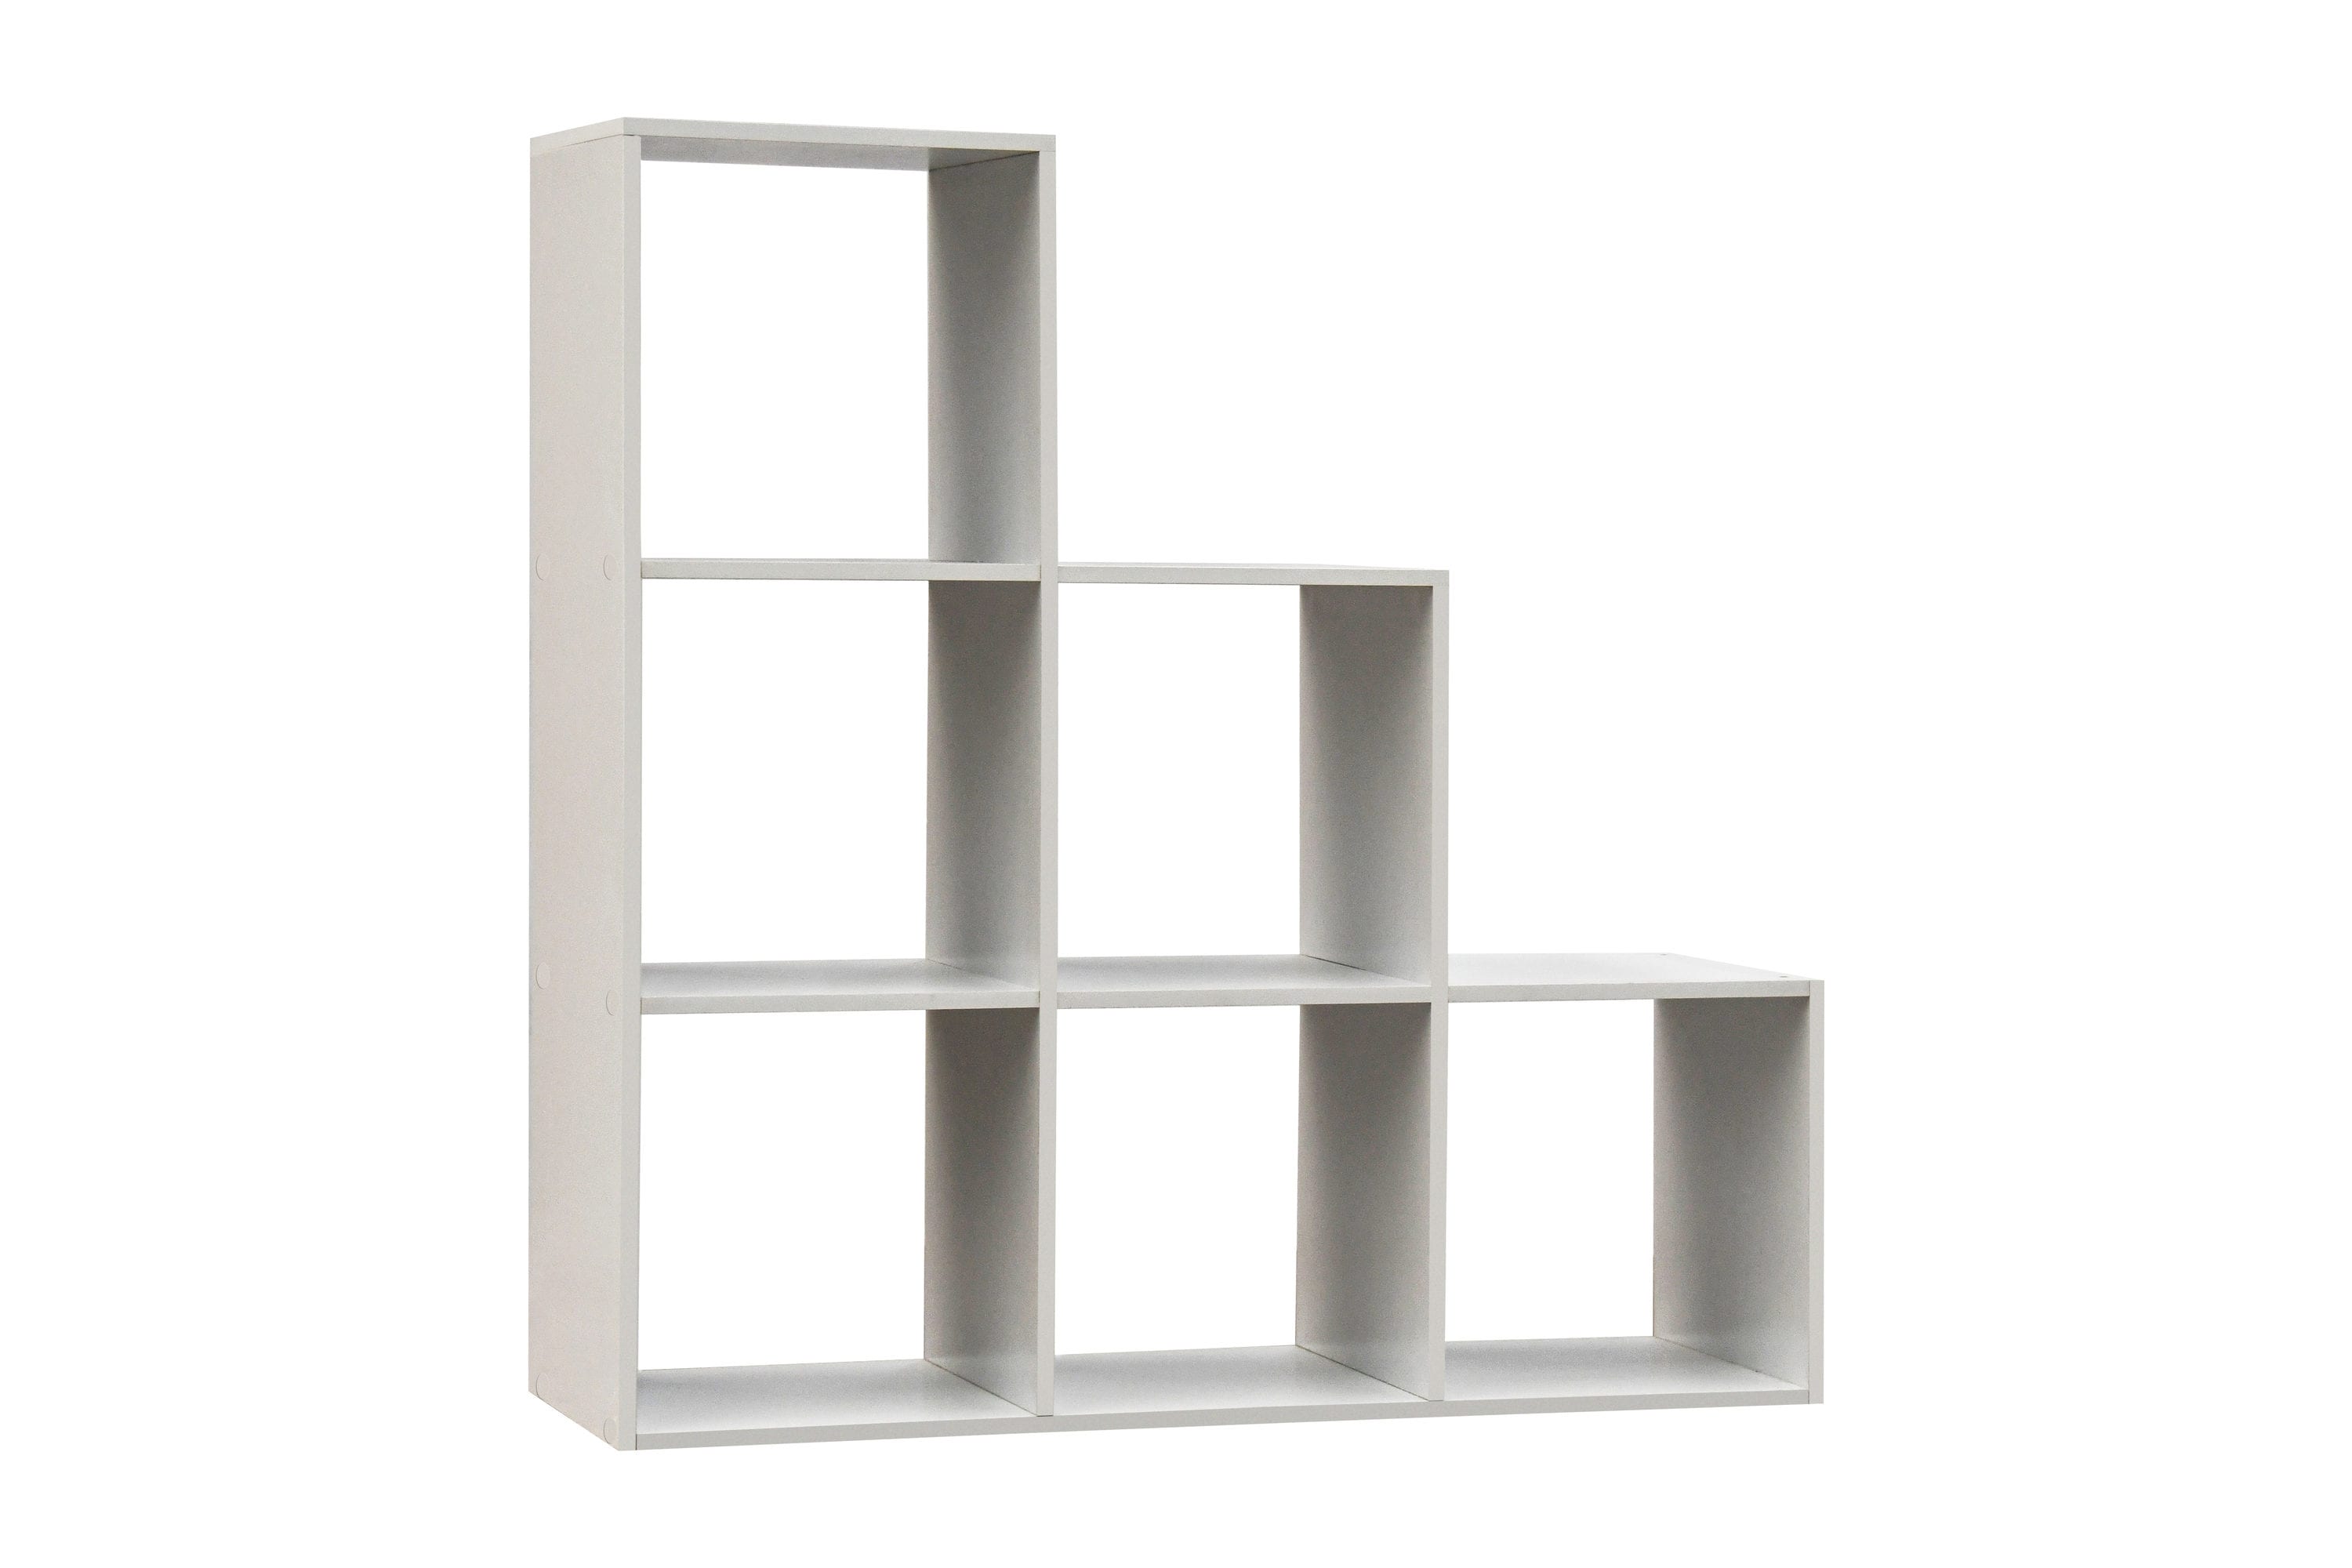 11 321 Cube Organizer Shelf White - Room Essentials™